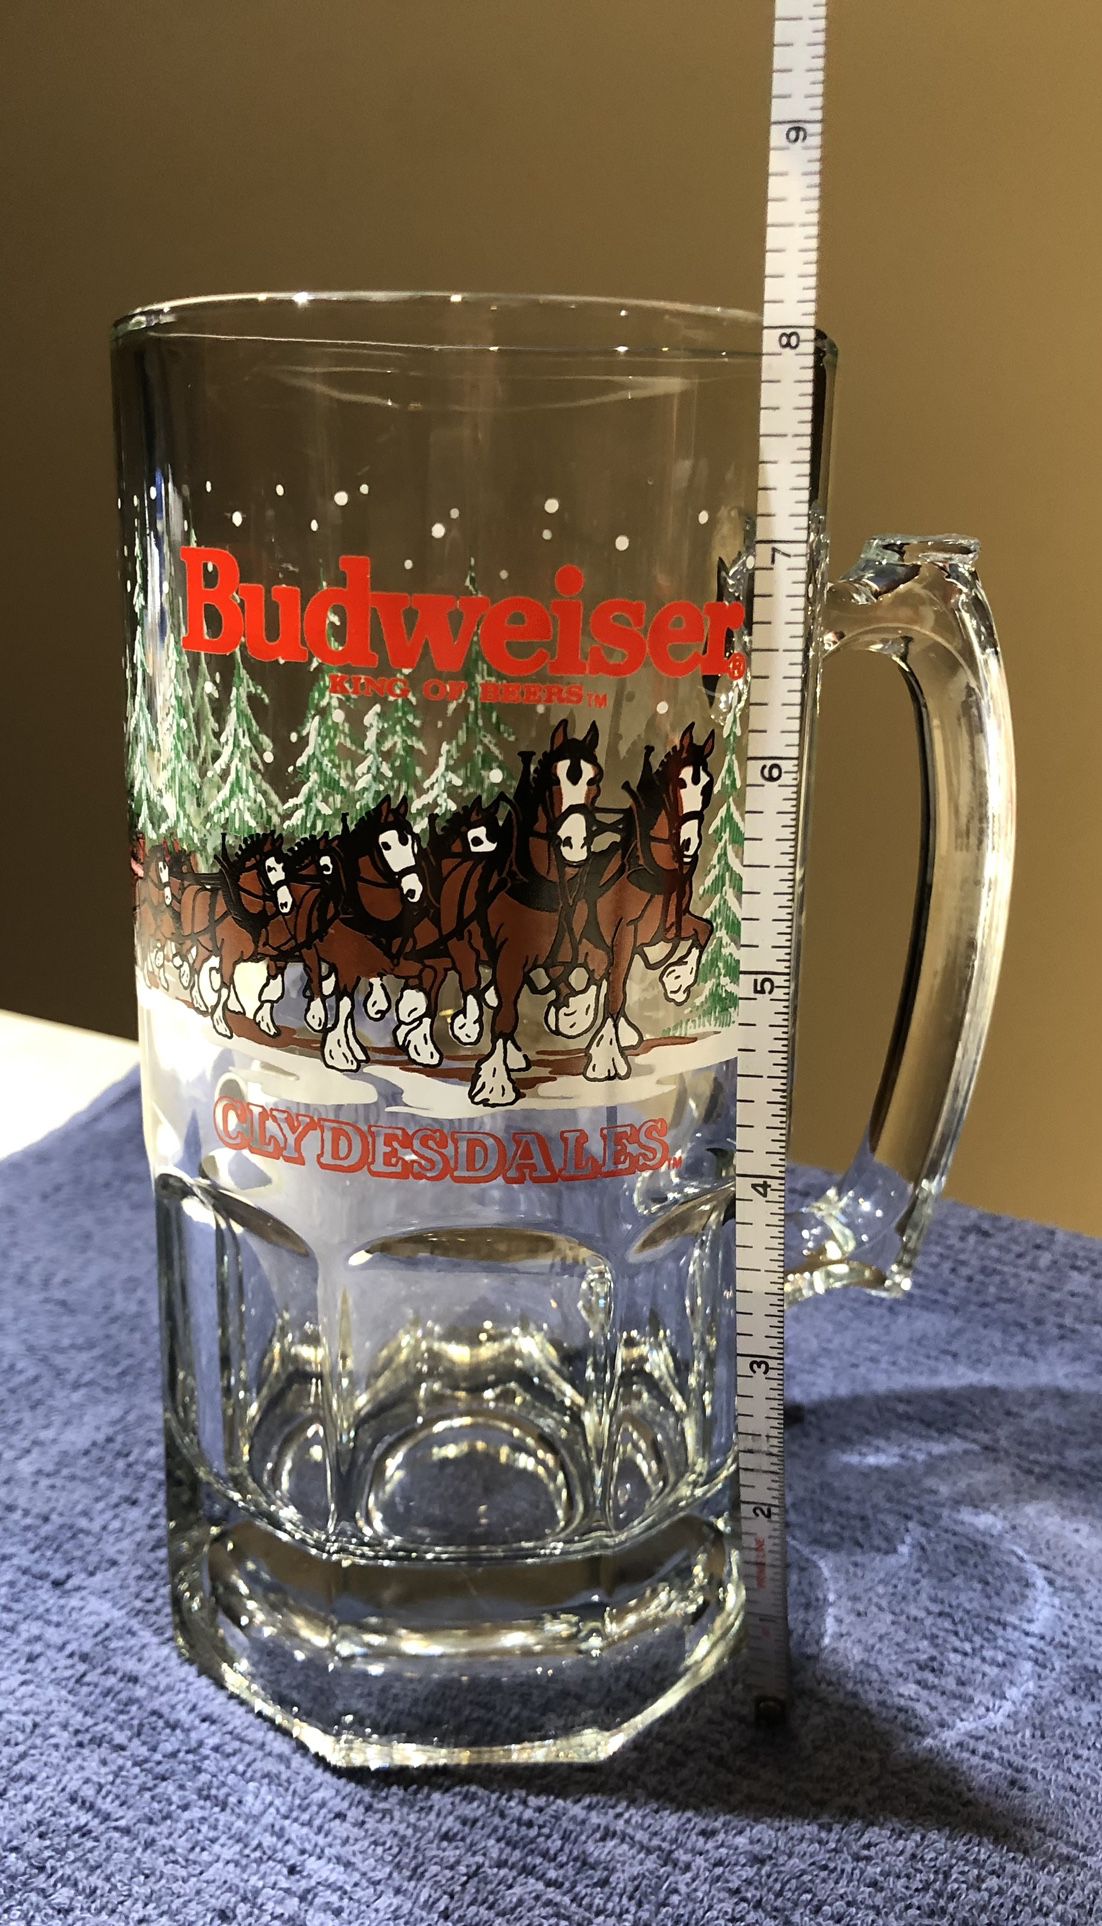 Budweiser Clydesdales Christmas Beer Mug